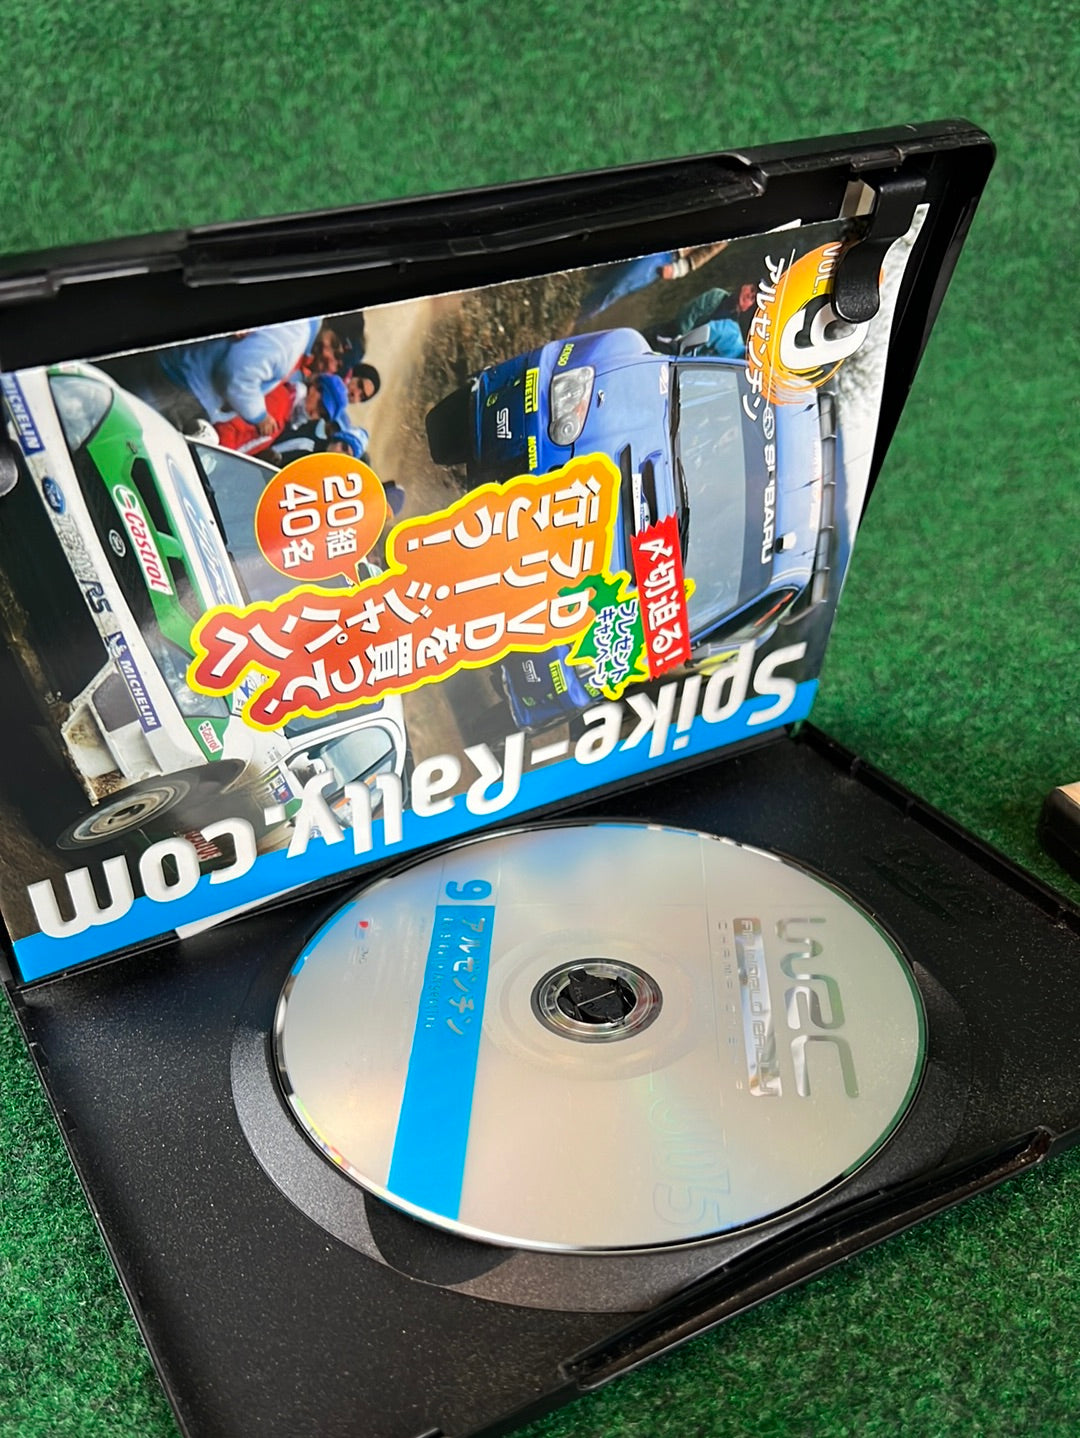 WRC DVD - World Rally Championship 2005  Round 8 & 9 Set